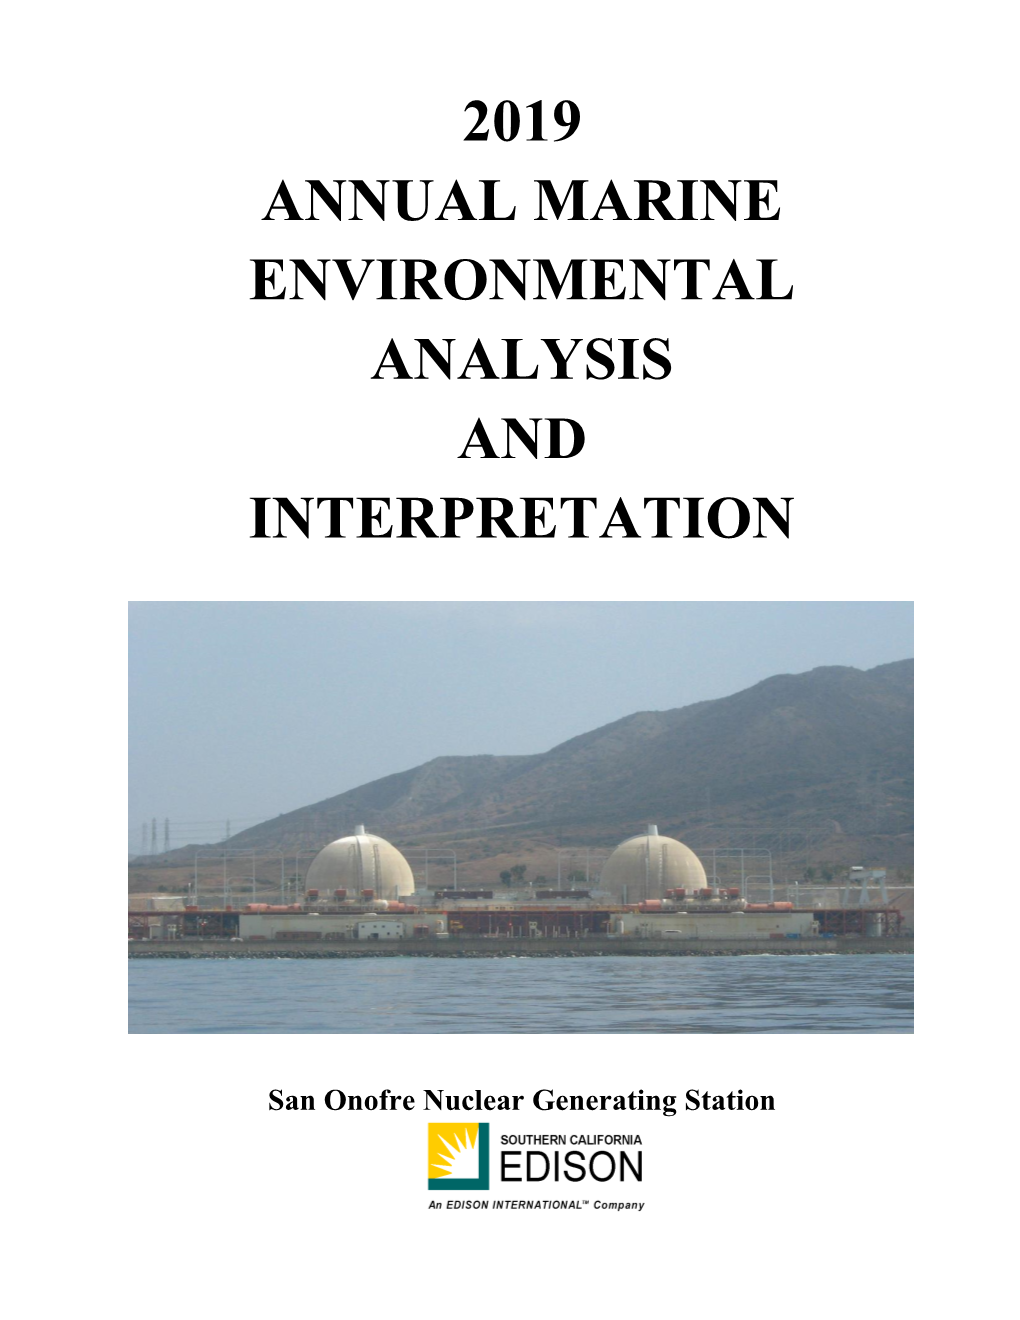 2019 Annual Marine Environmental Analysis and Interpretation Report